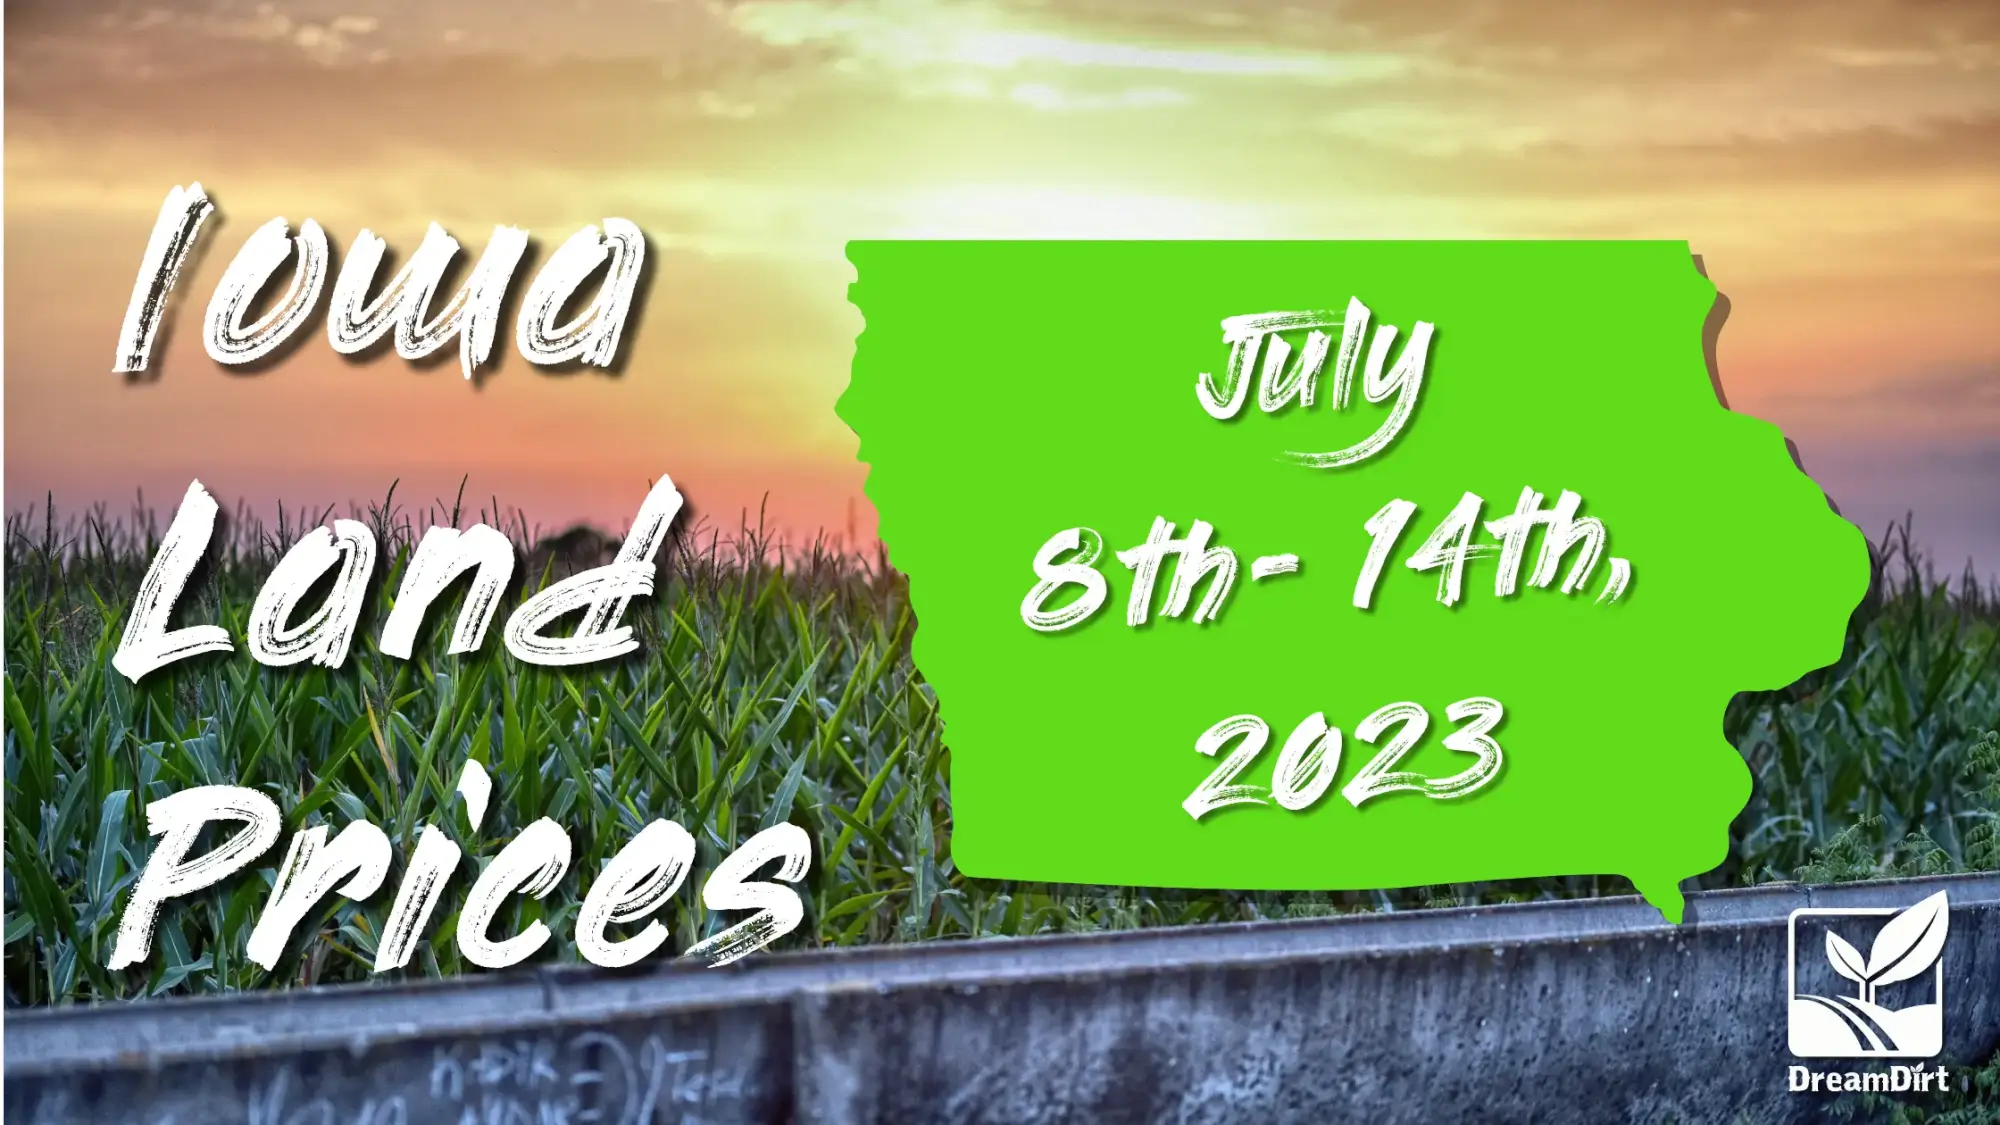 Iowa farmland sales and prices July 8-14th, 2023